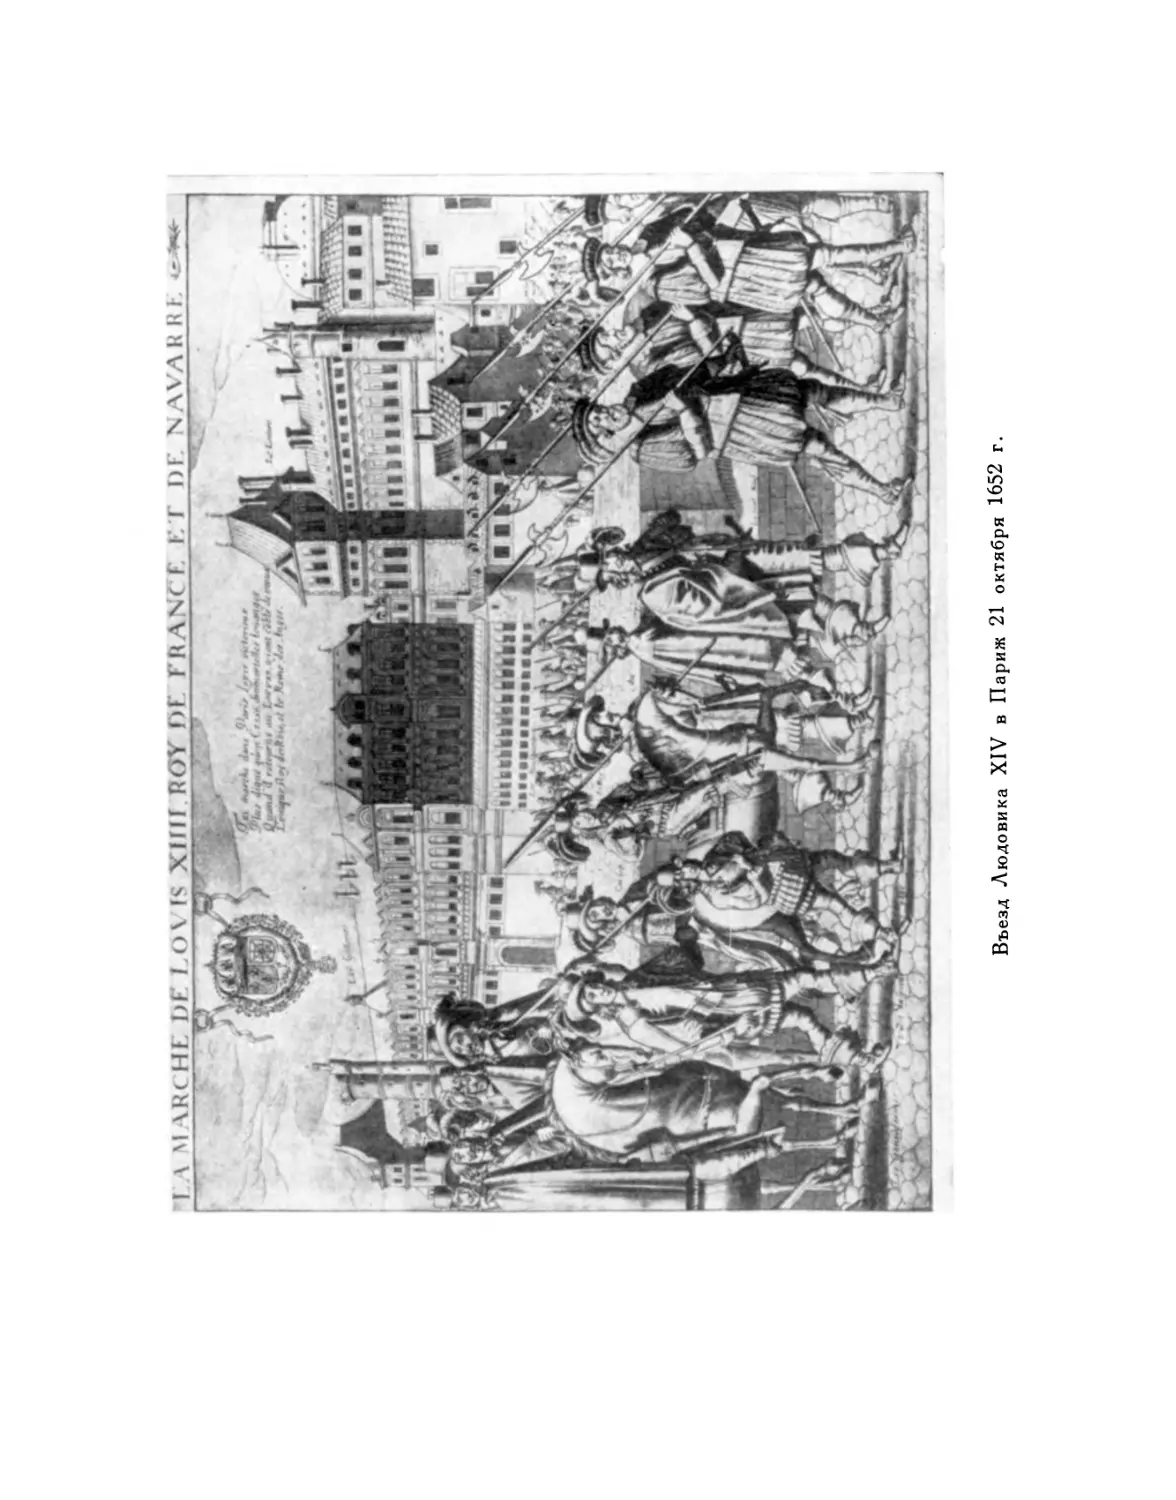 Вклейка. Въезд Людовика XIV в Париж 21 октября 1652 г.